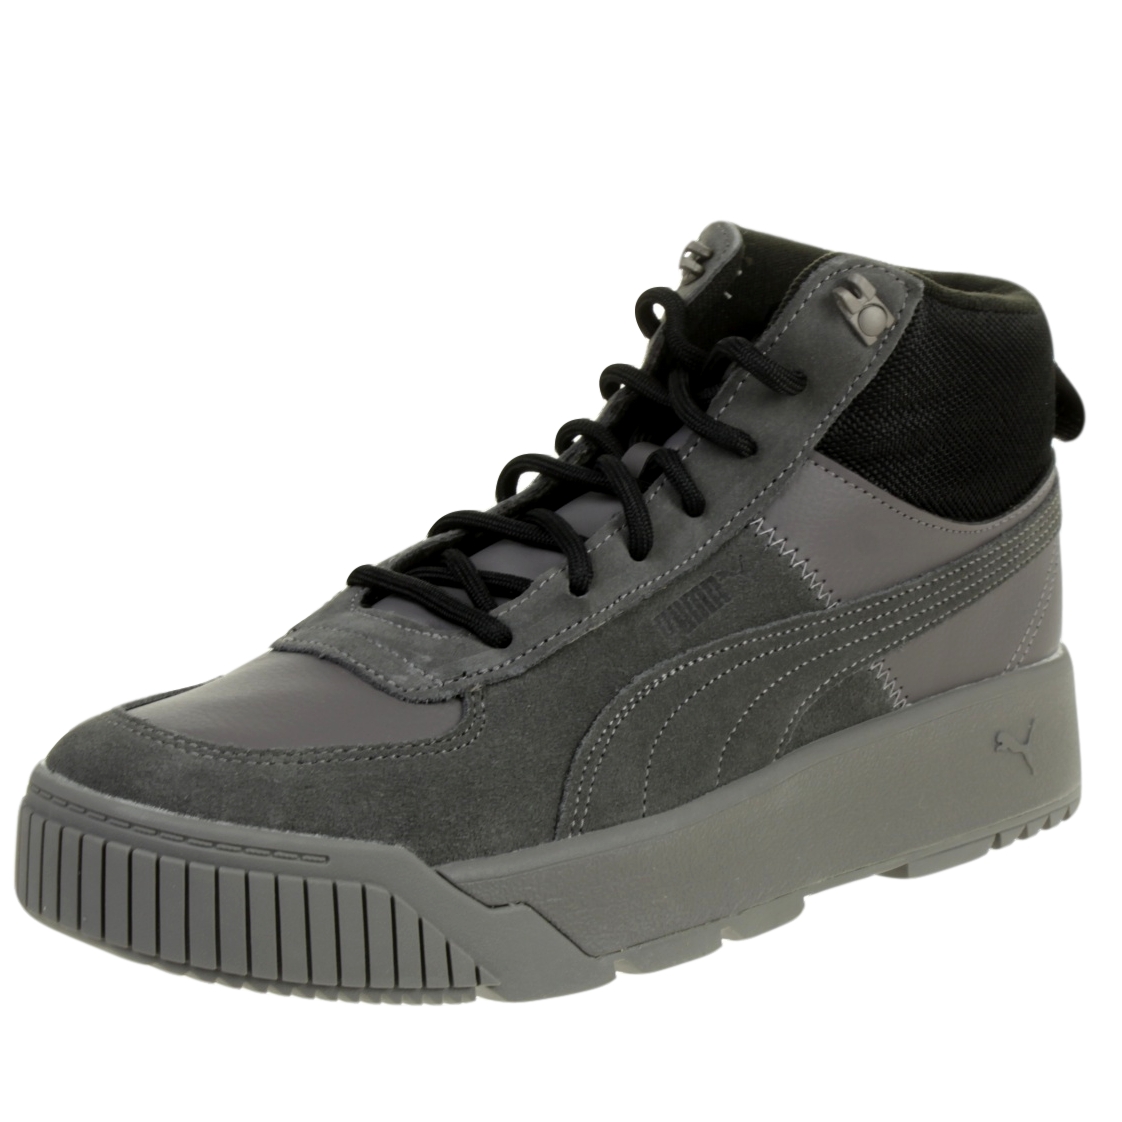 Puma Herren Tarrenz SB High-Top Sneaker Stiefel 370551  Grau